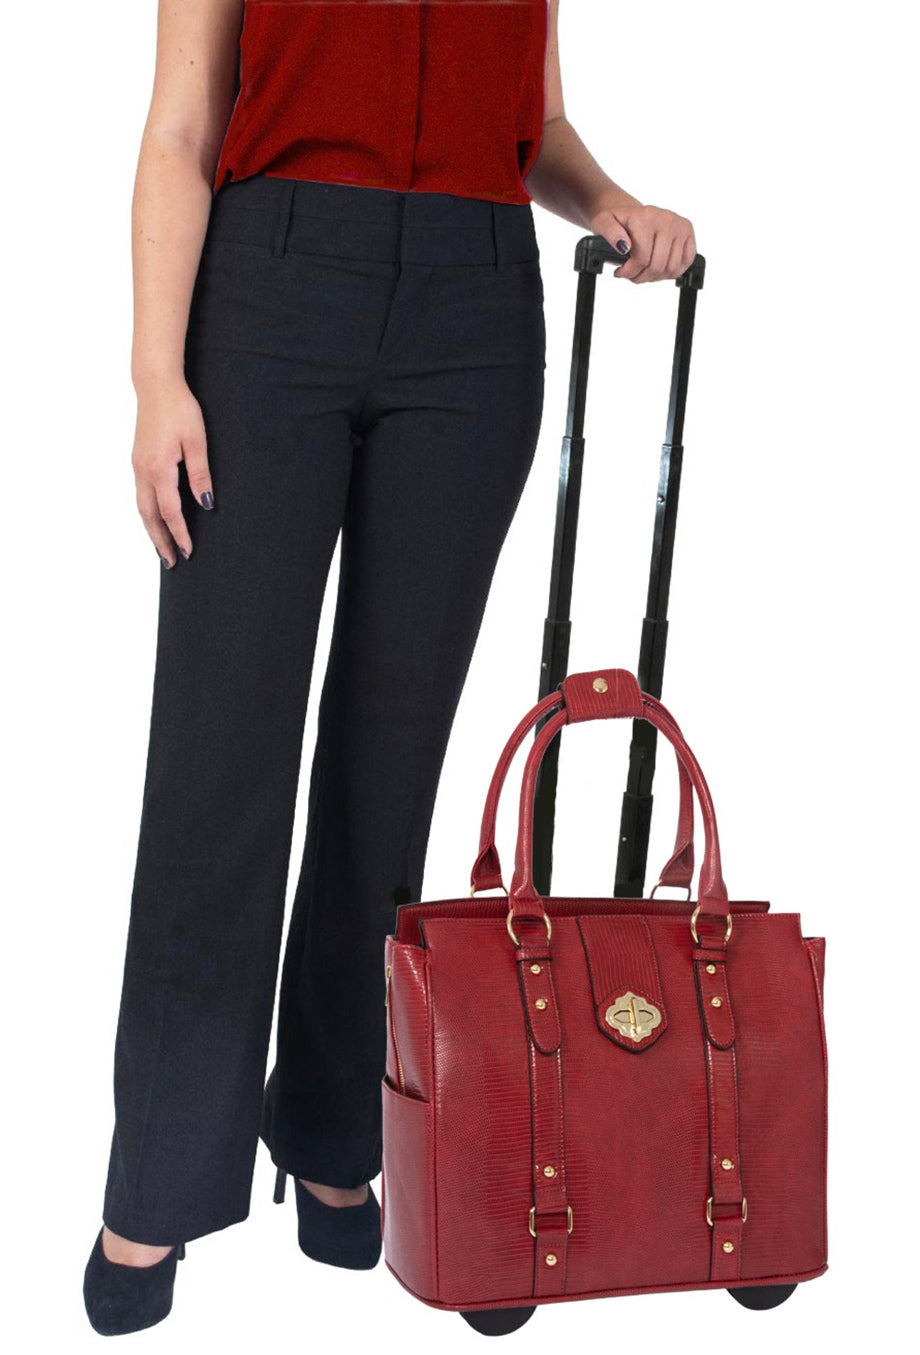 Business Rolling Laptop Bag  Custom Rolling Handbags - JKM and